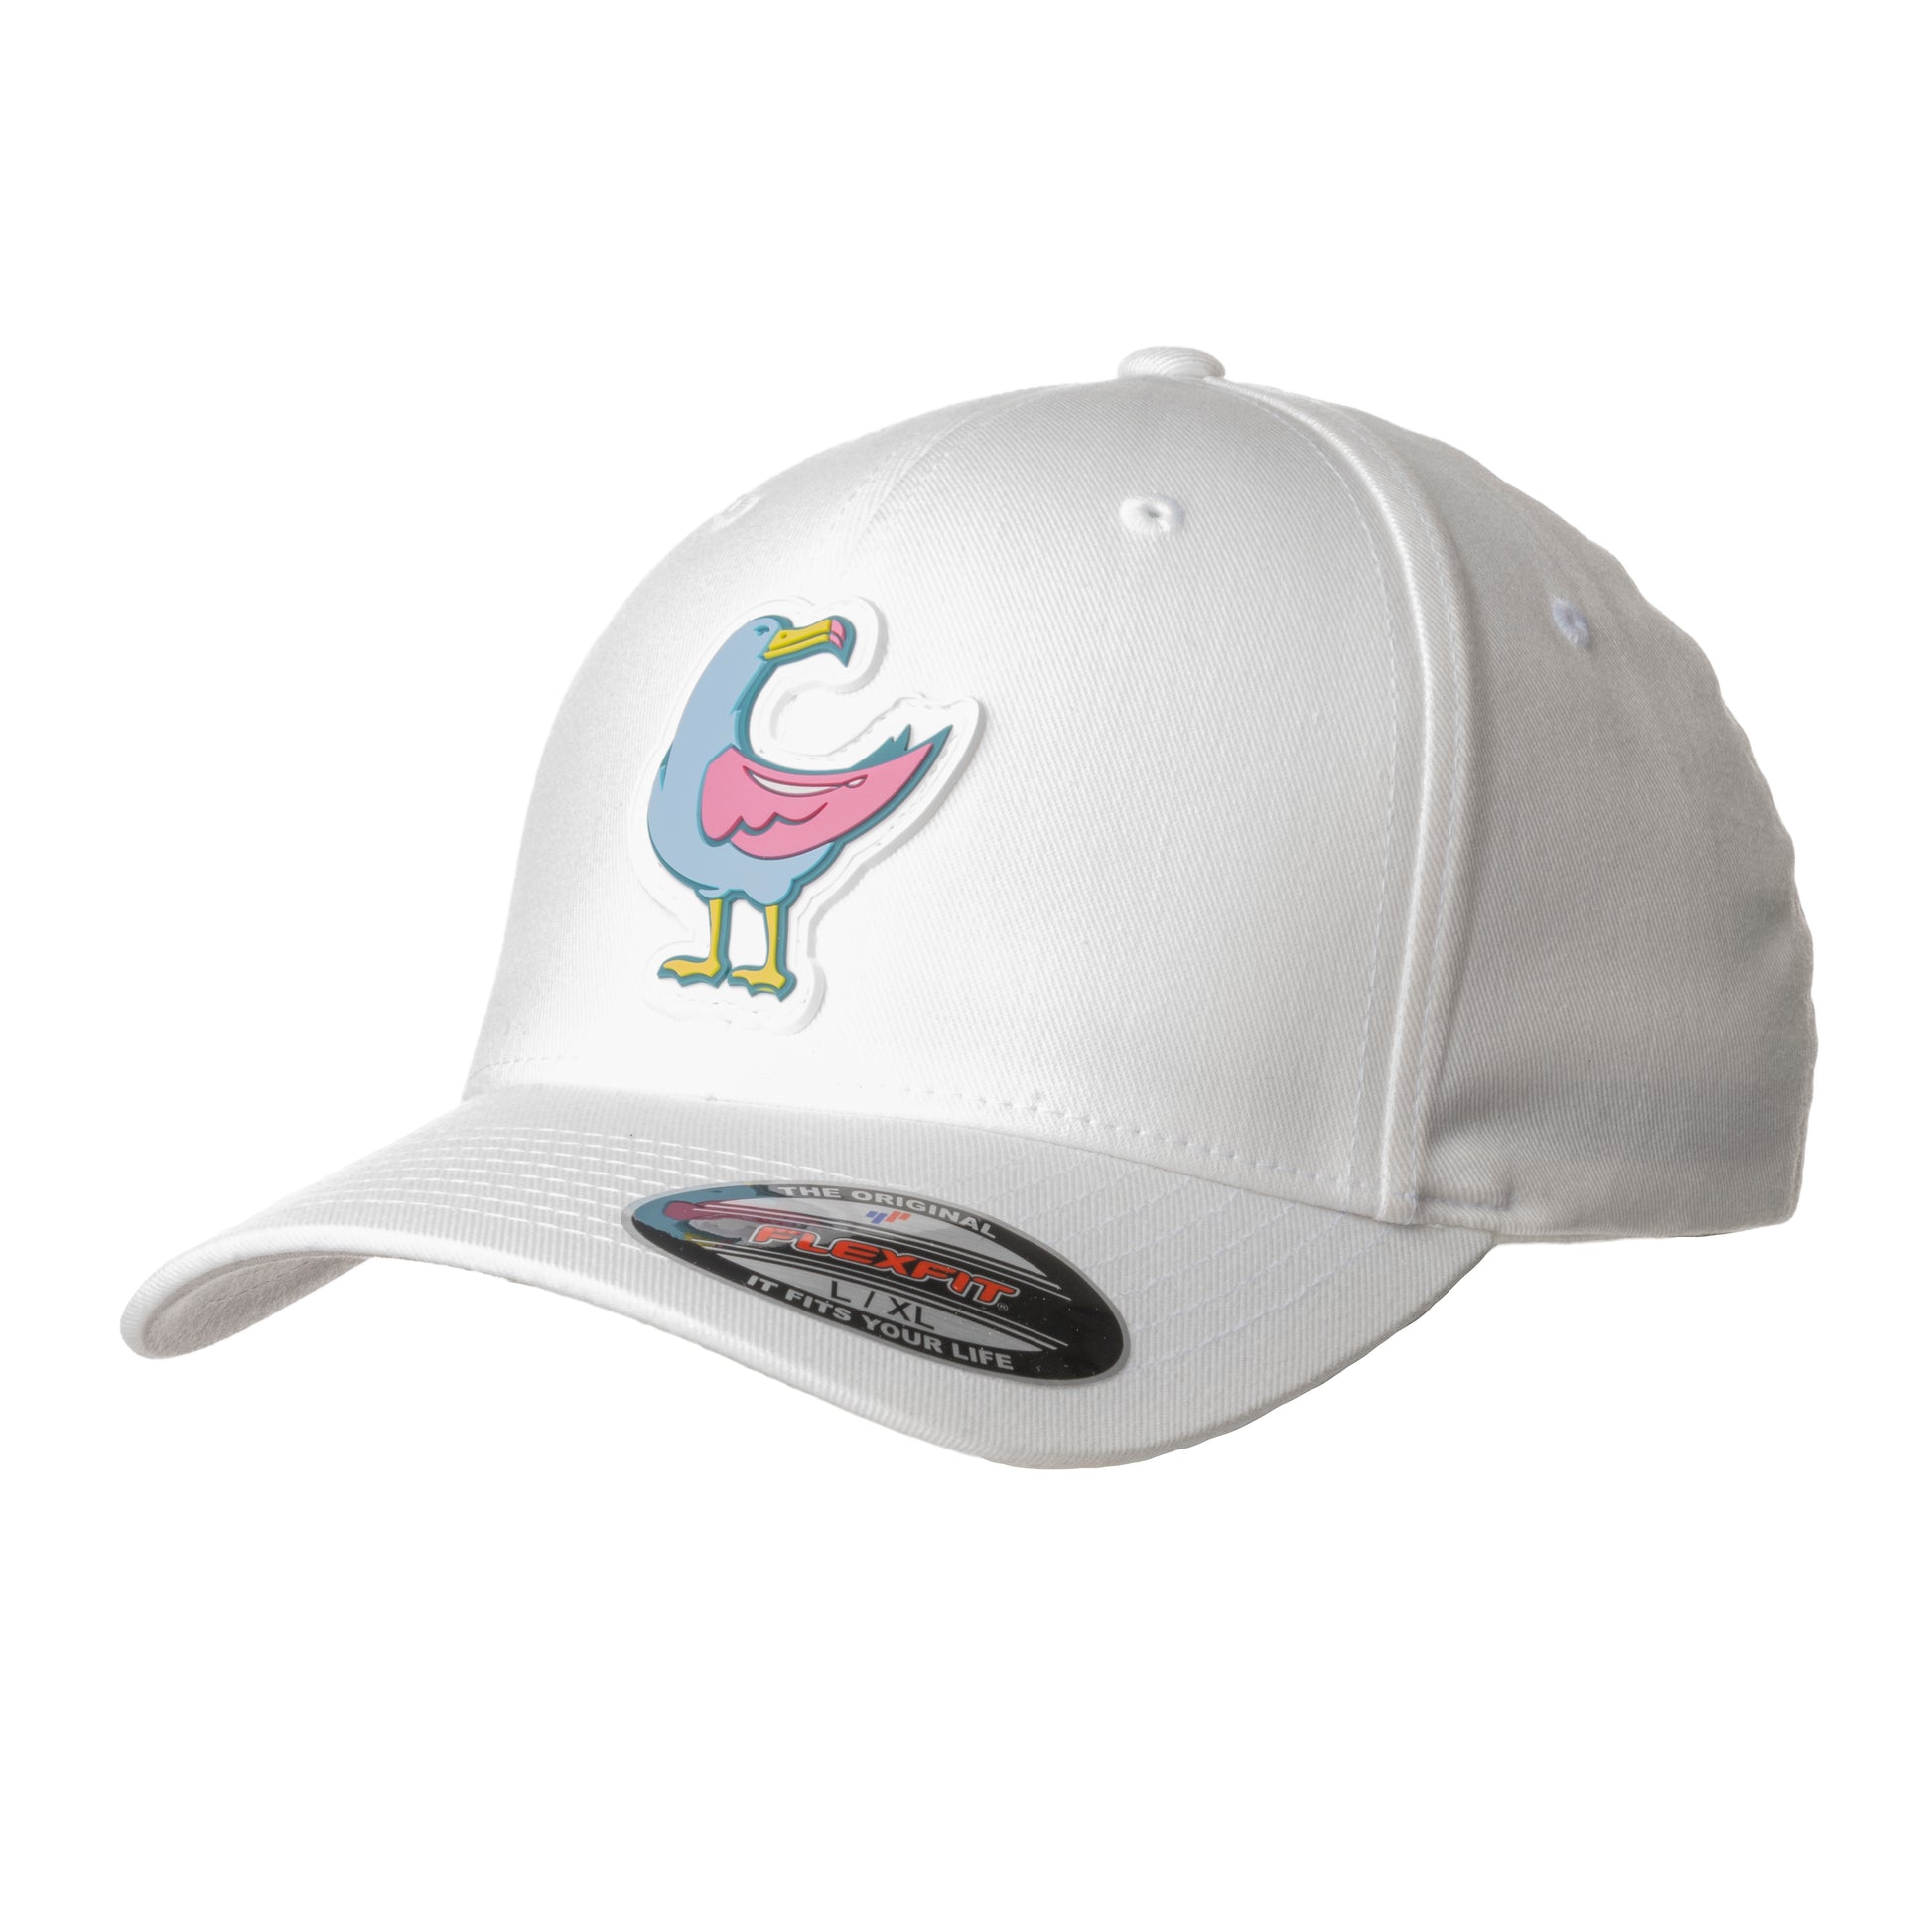 Flexfit cap - – Golf A Albatross white Big 